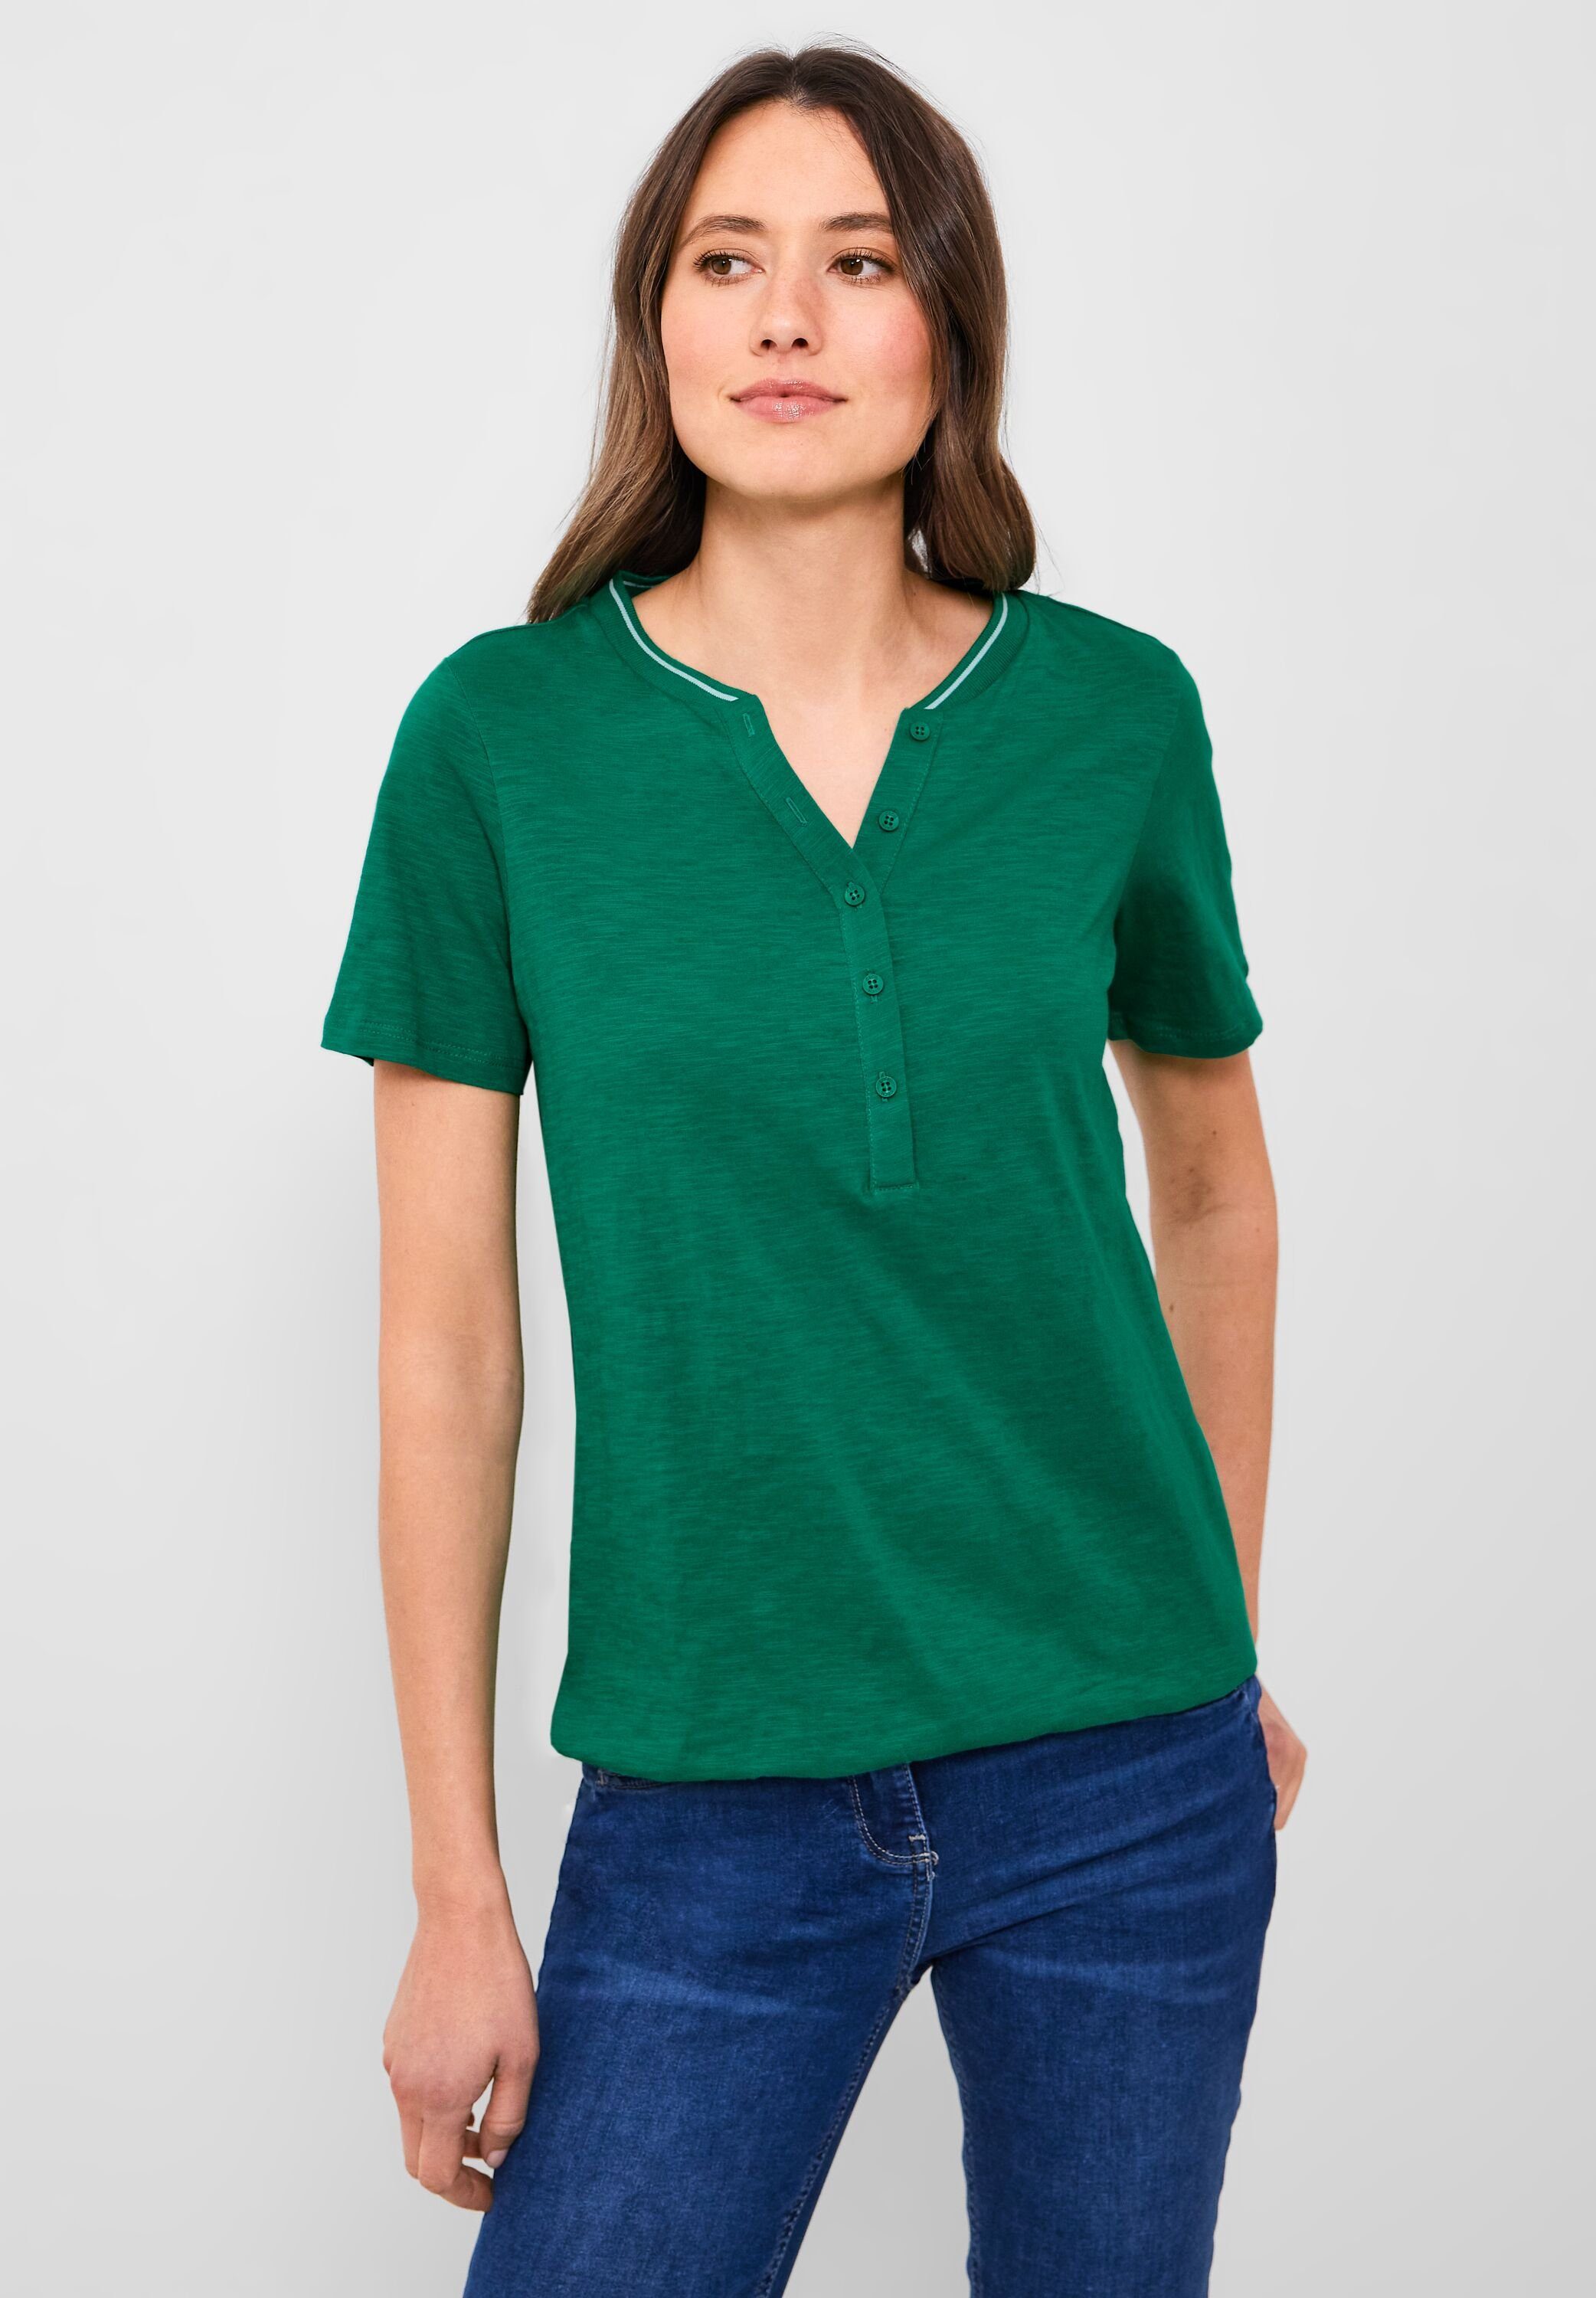 Preis für den Durchschnittsbürger Cecil 3/4-Arm-Shirt in Unifarbe luscious green